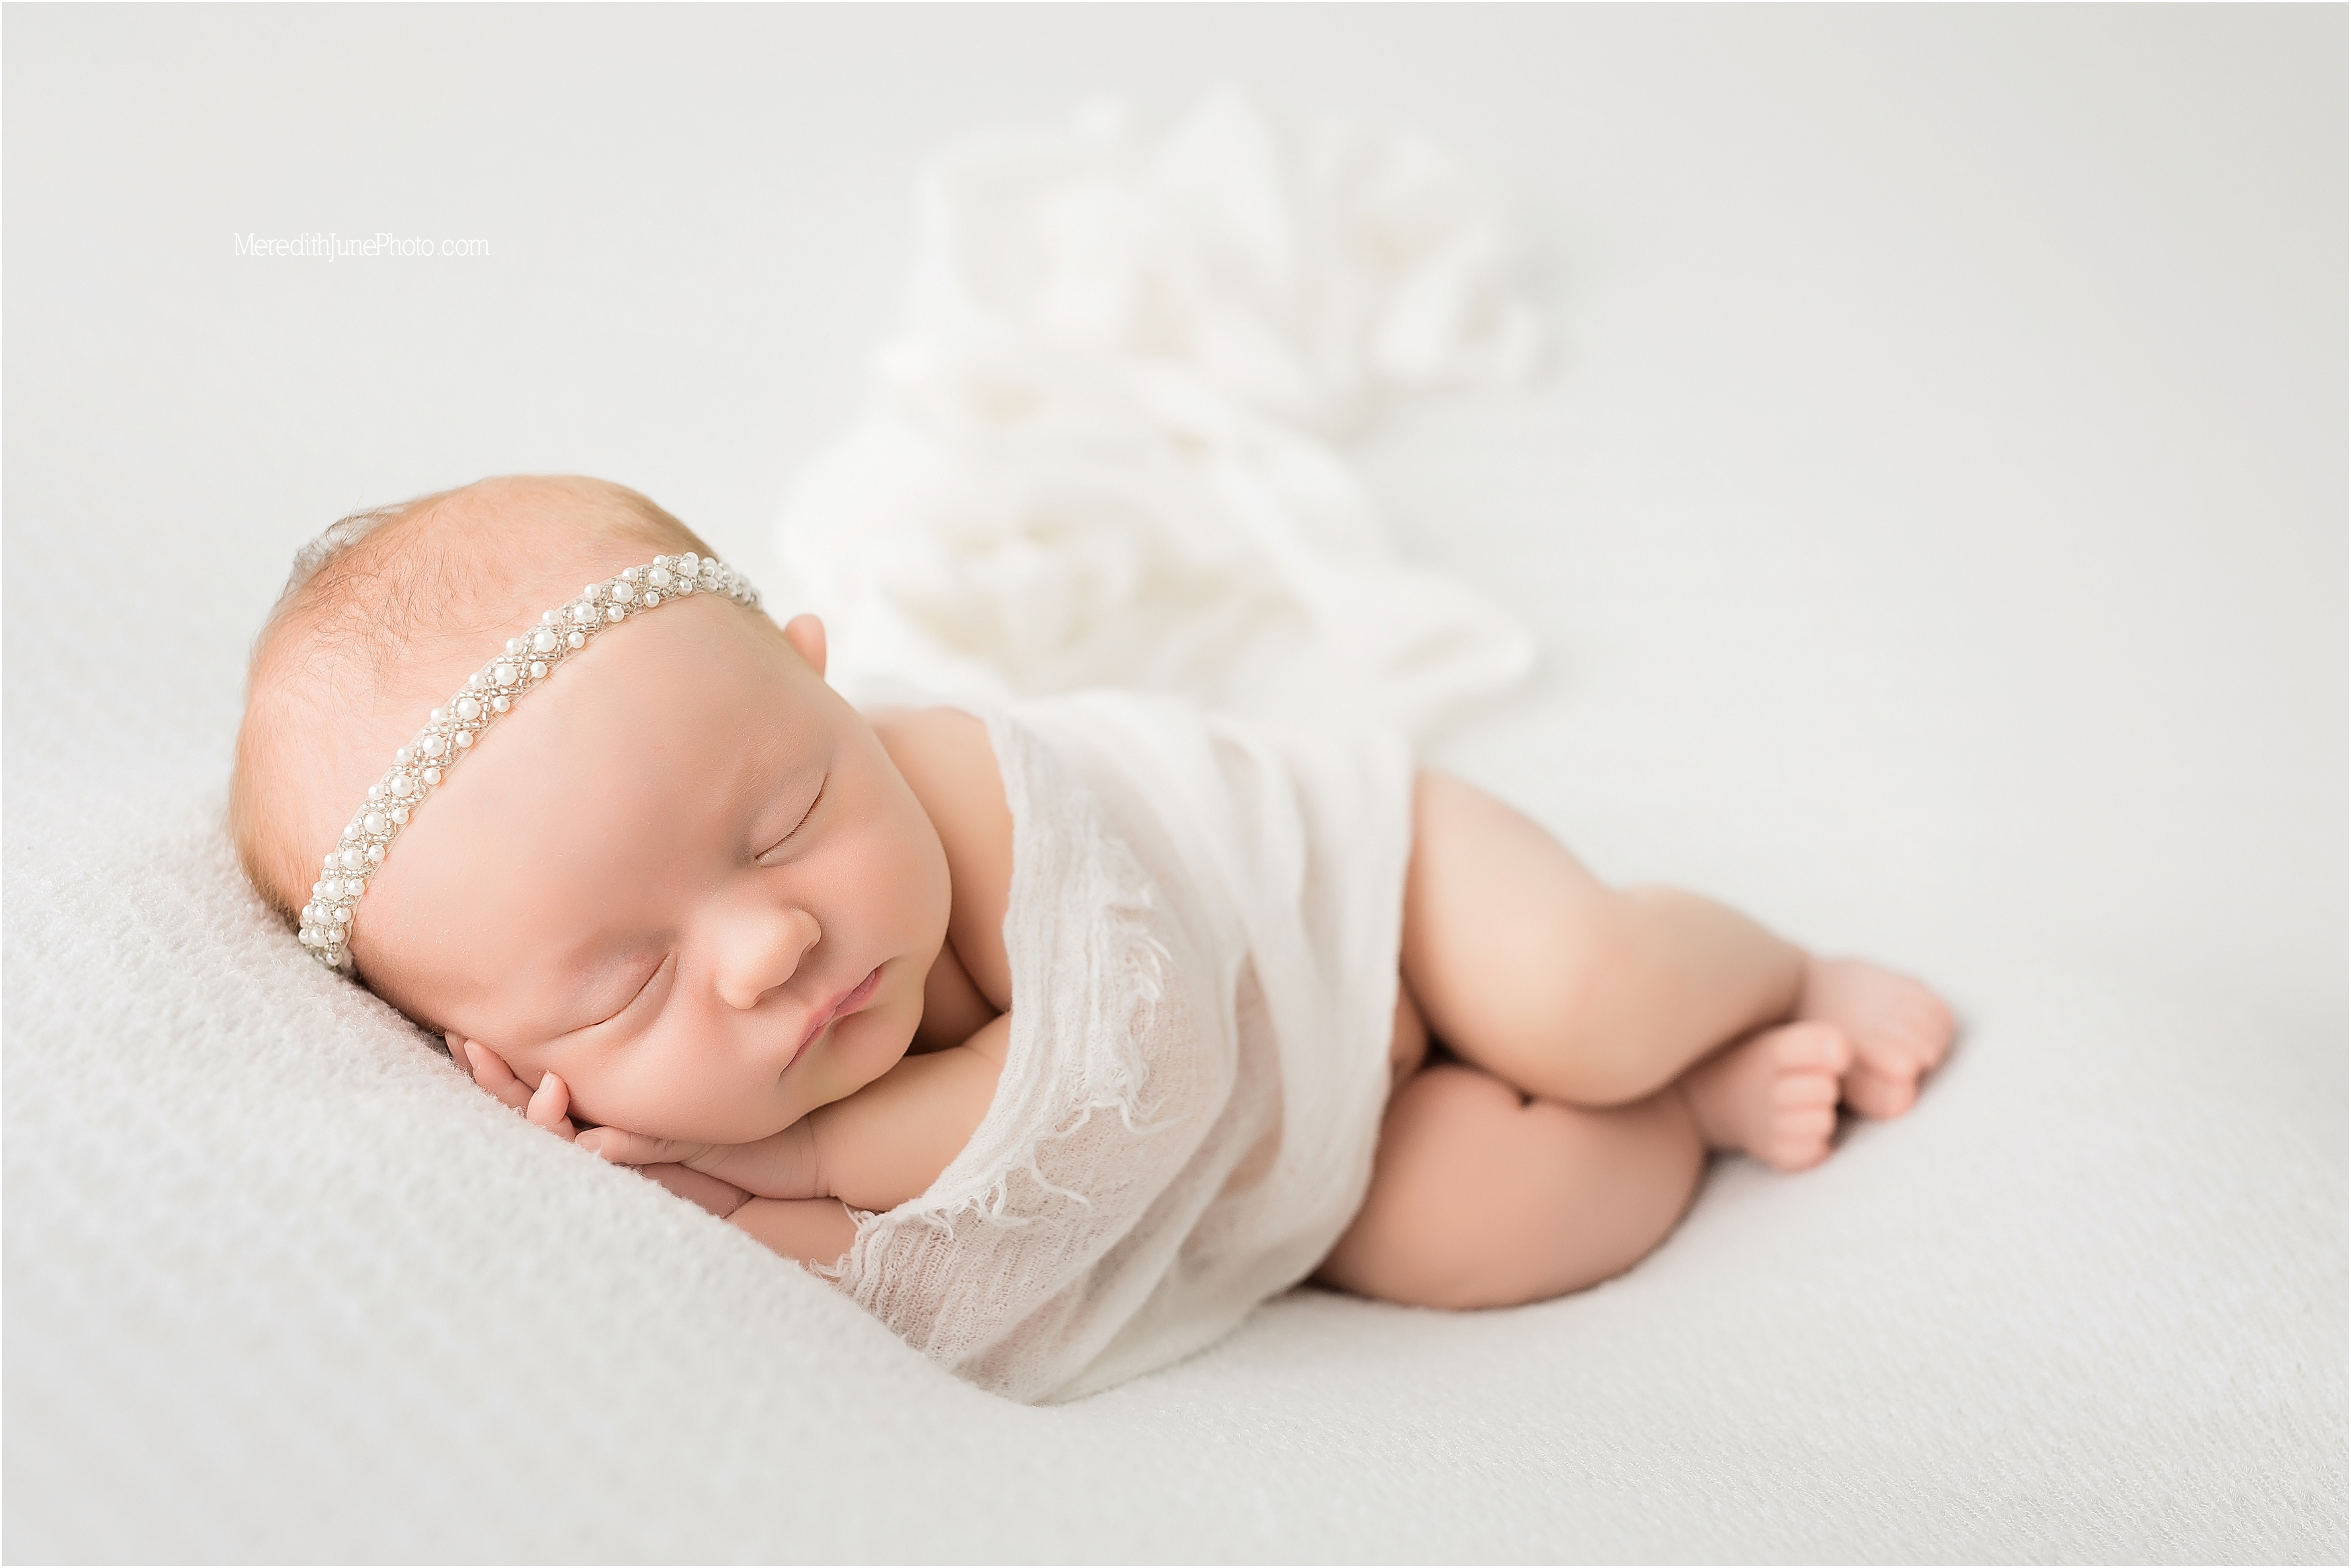 Baby Blake's newborn session at Meredith June Photography